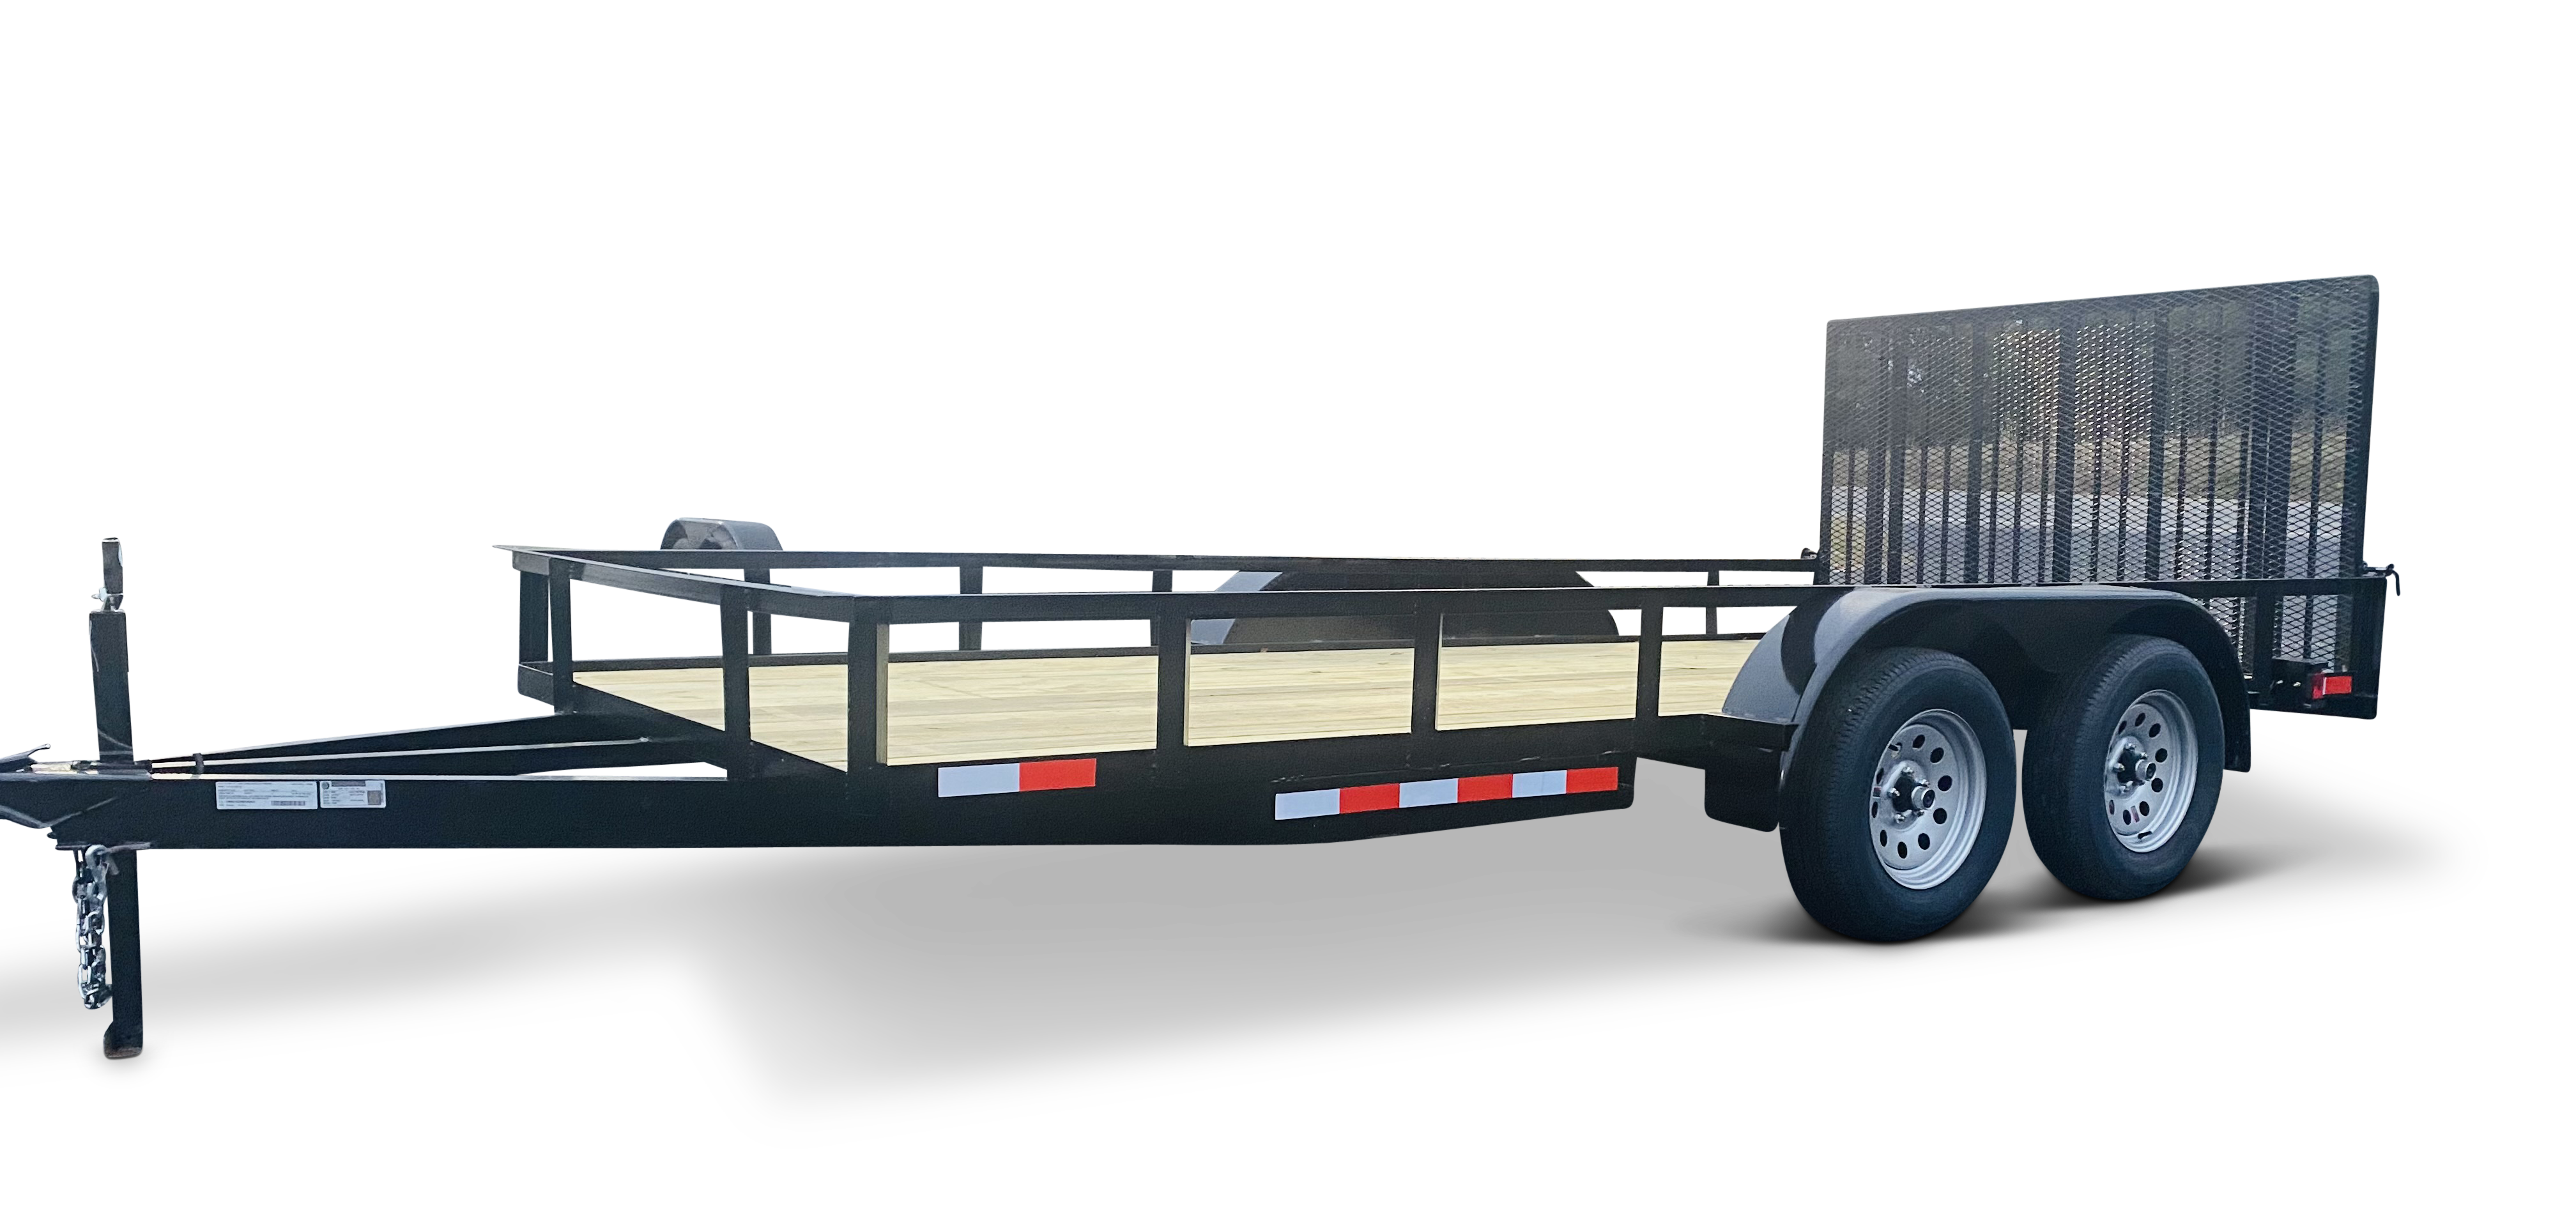 7x16 utility trailer